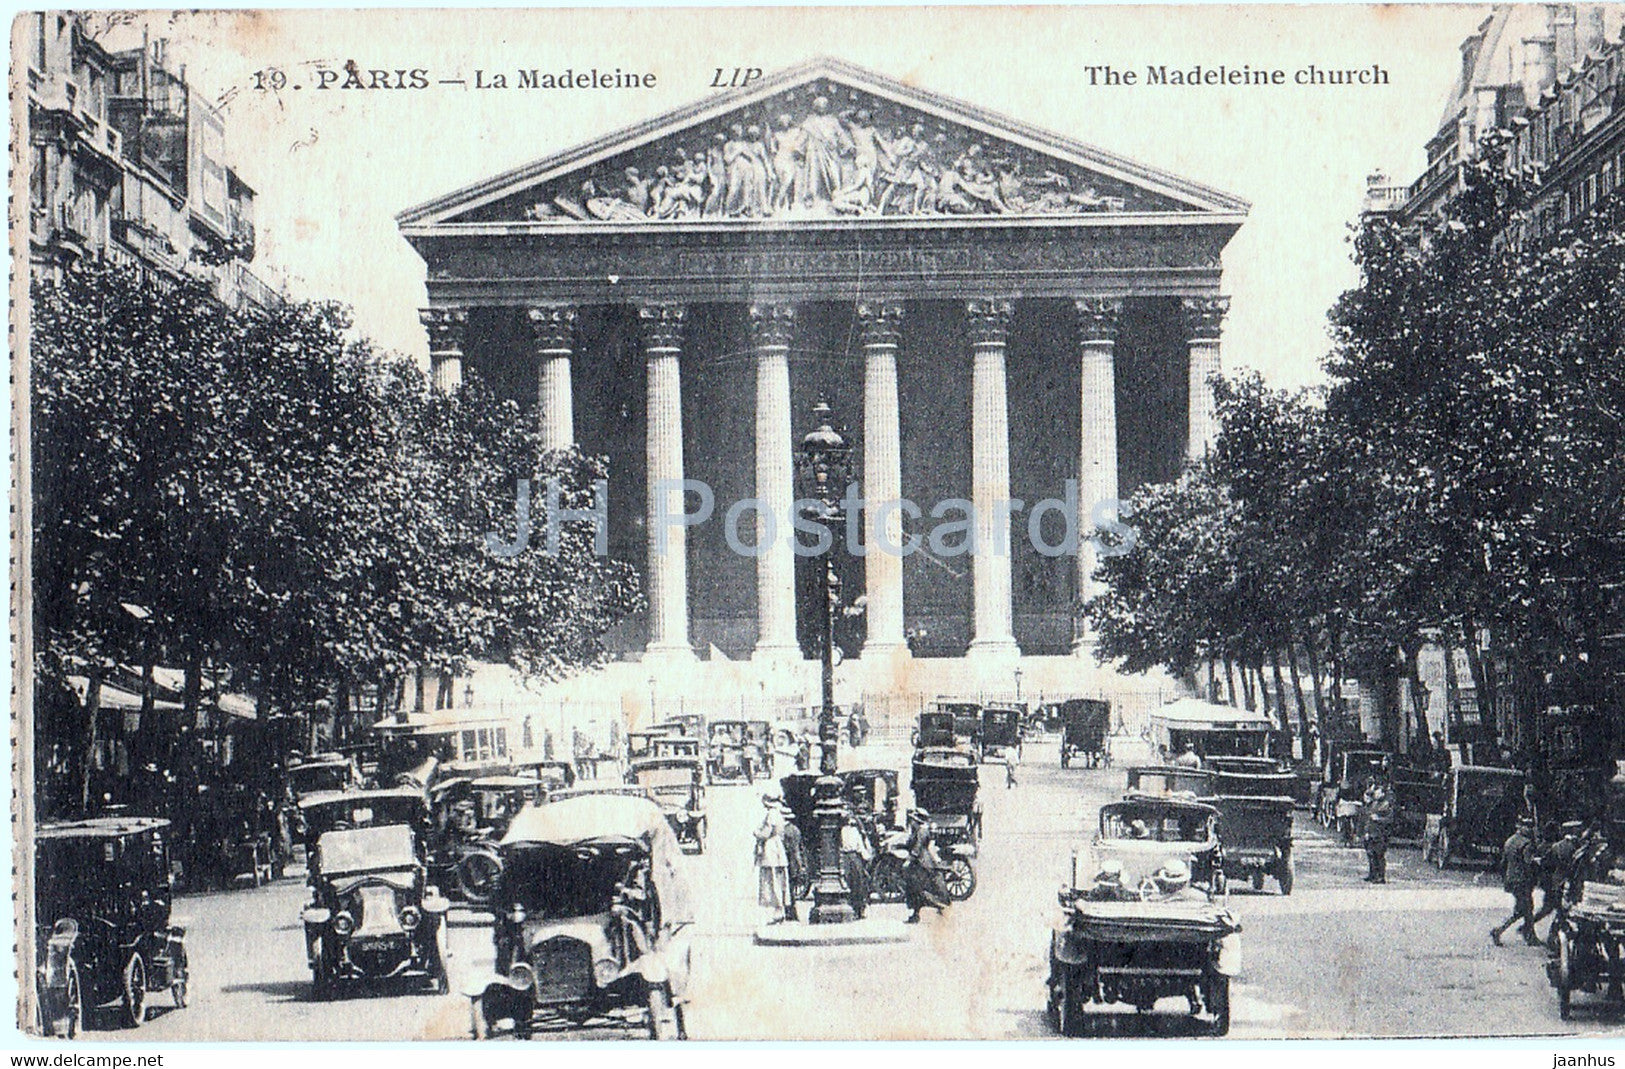 Paris - La Madeleine - The Madeleine Church - old car - 19 - LIP - old postcard - France - used - JH Postcards